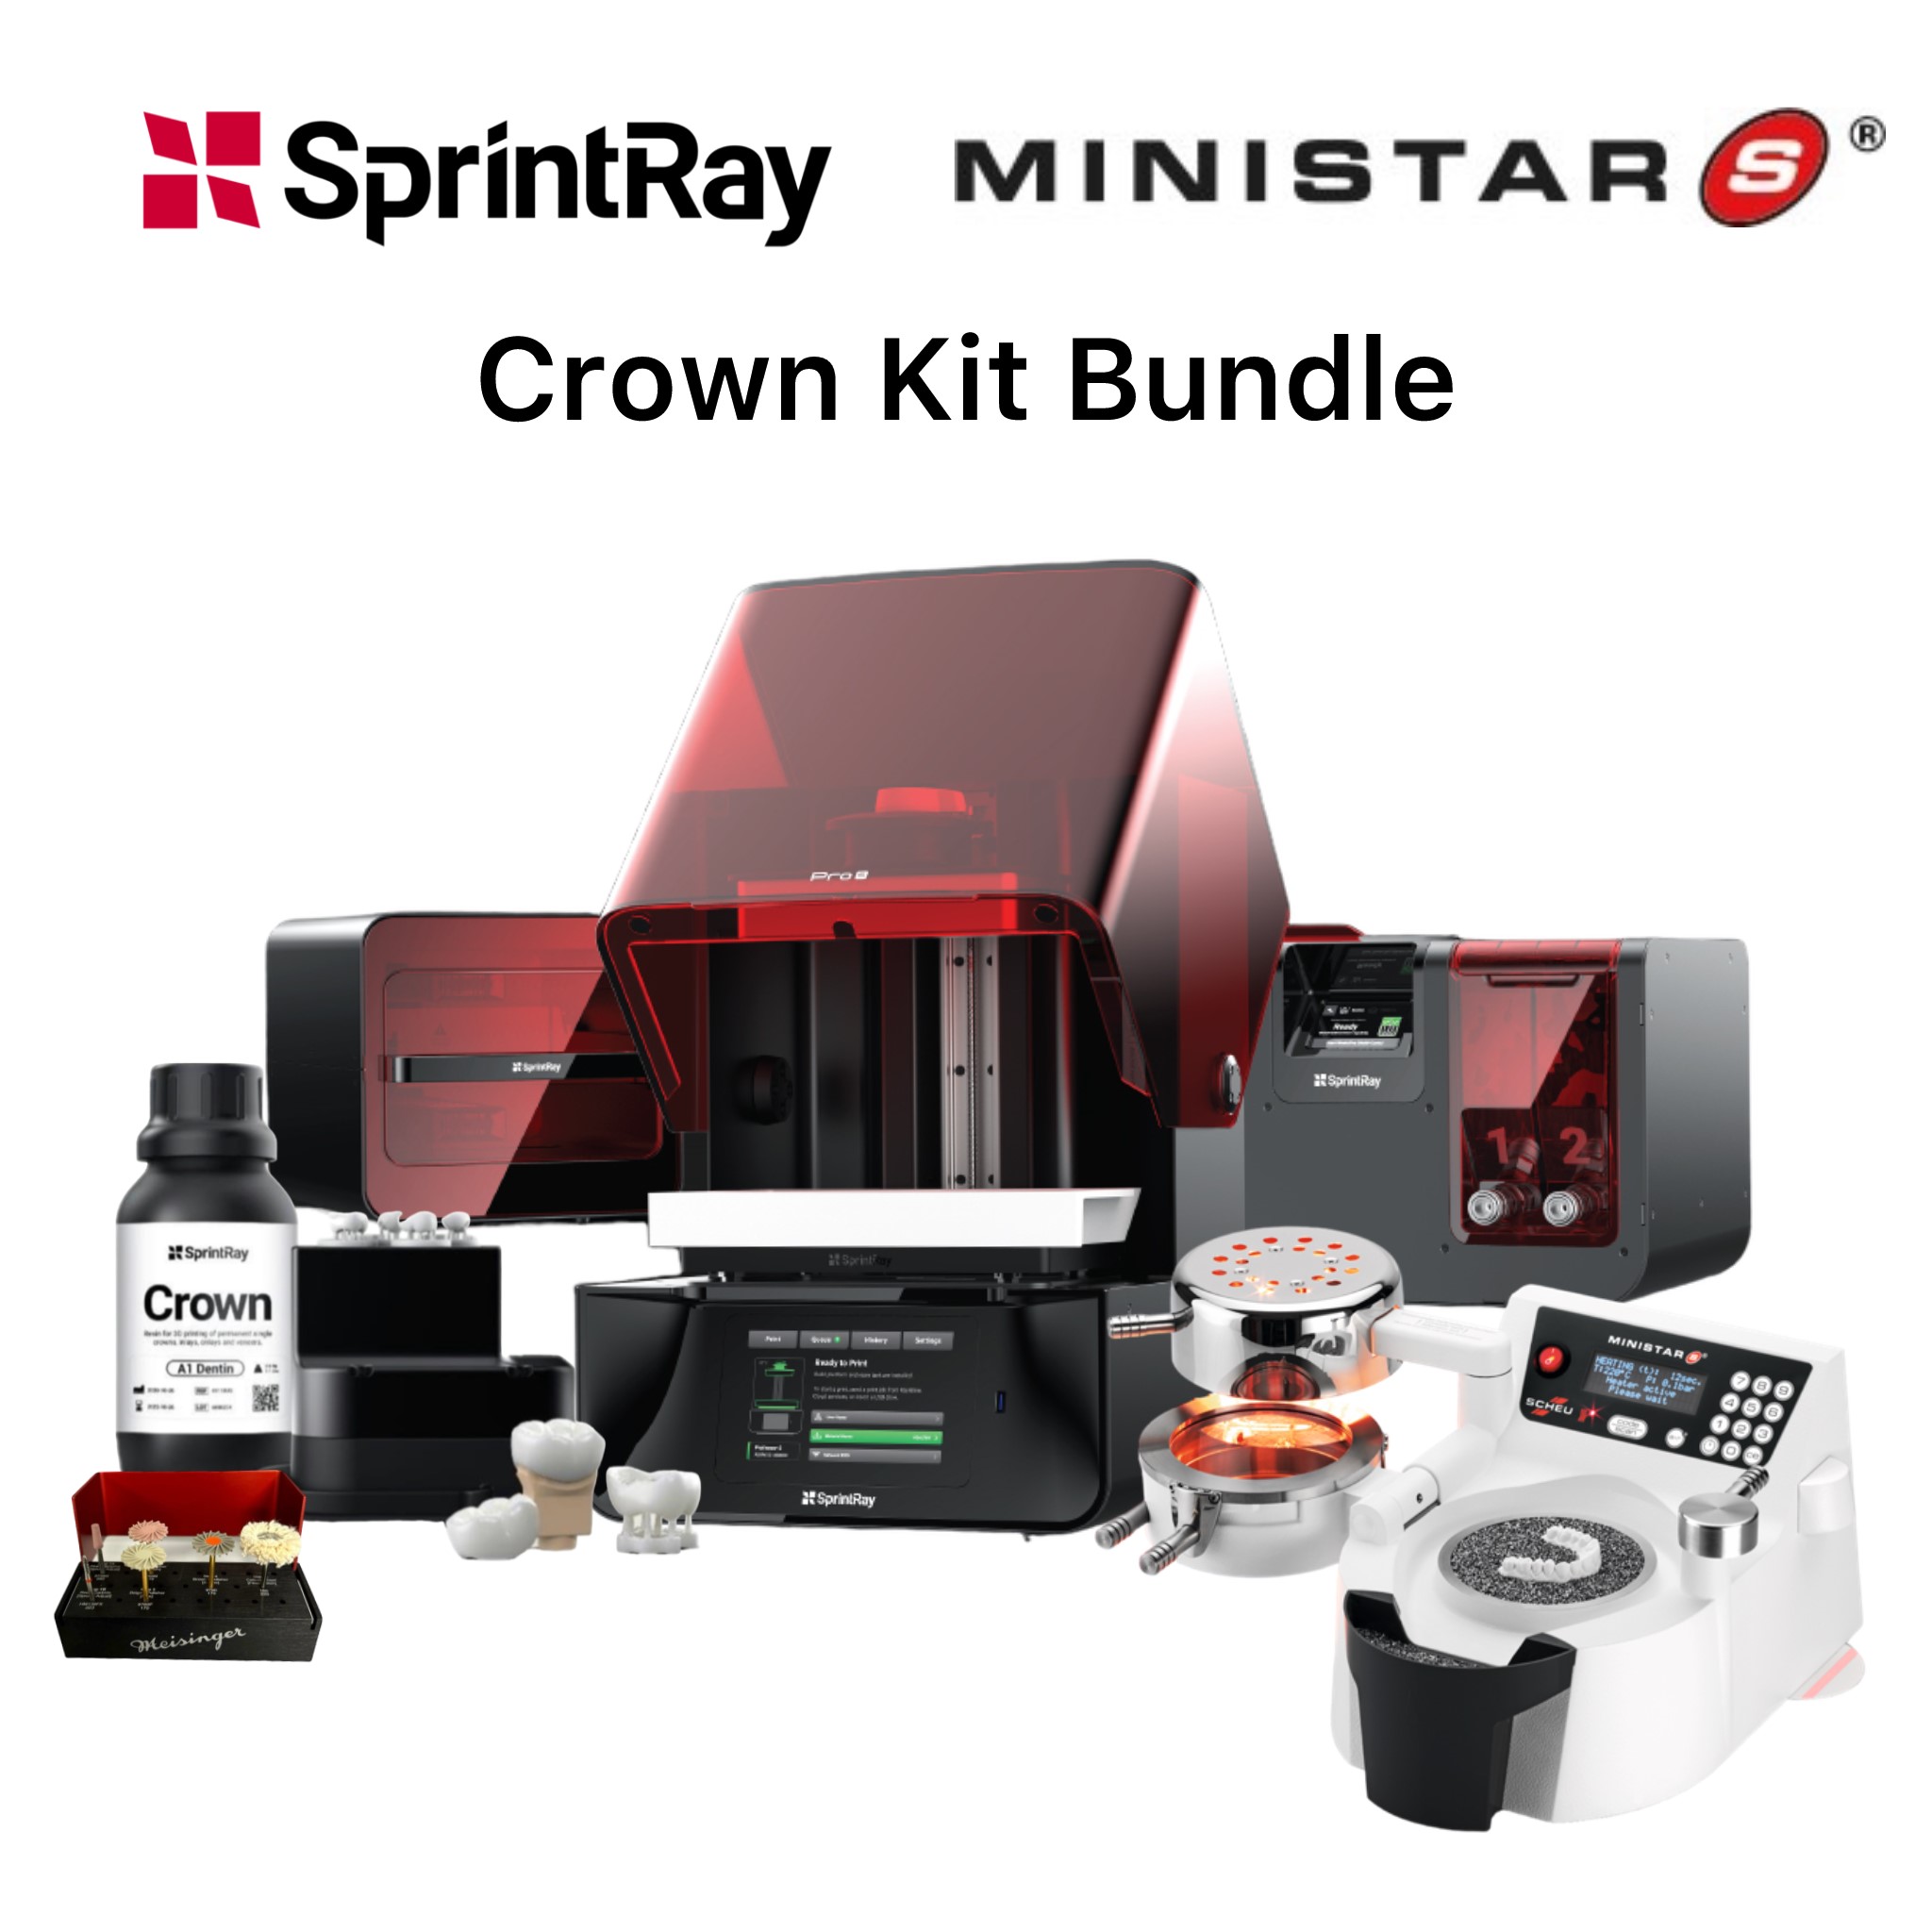 SprintRay Pro95 S 3D Printer CROWN Kit Bundle & Ministar S